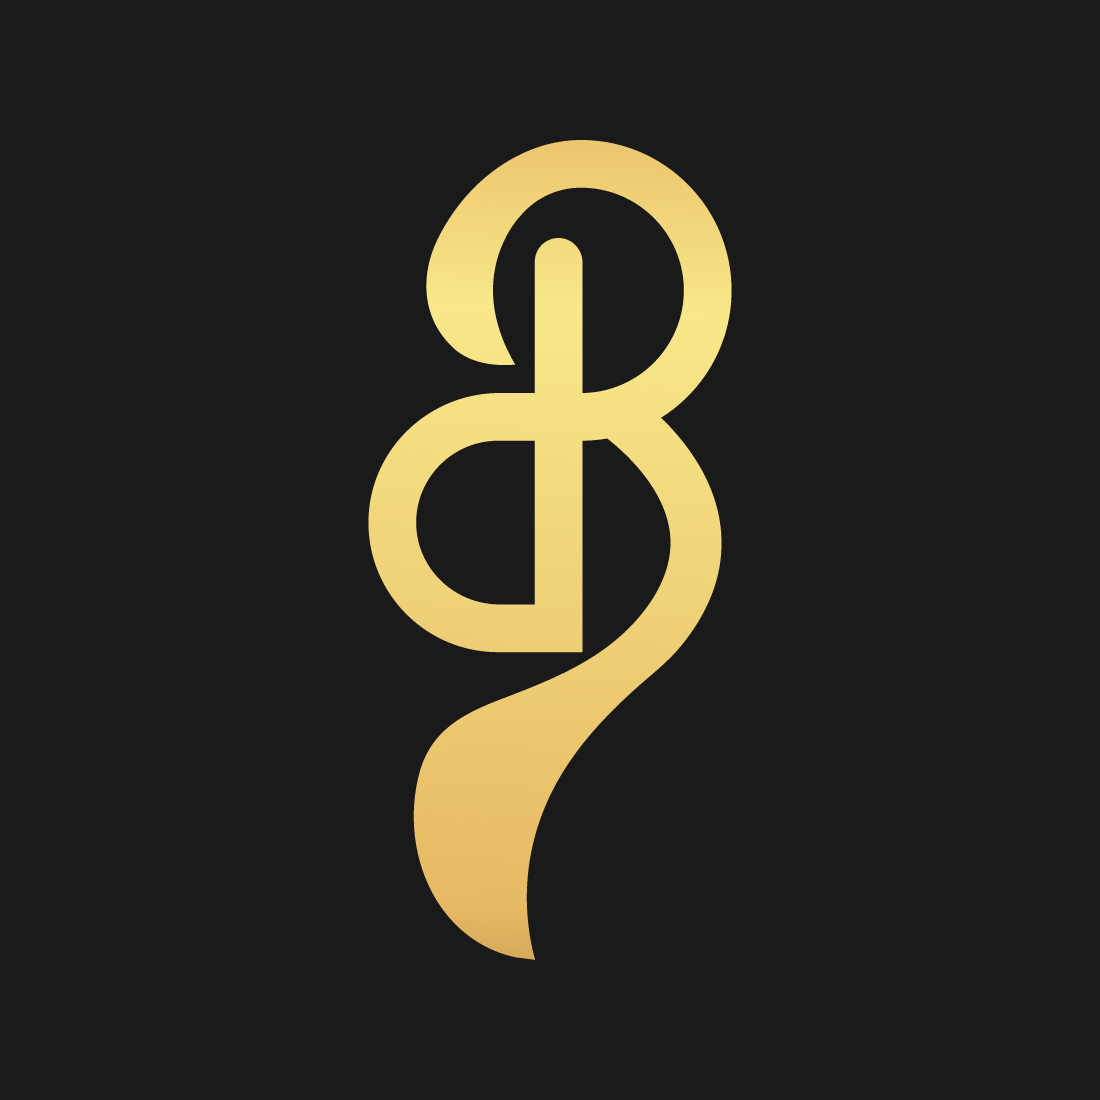 Luxury DB logo design preview image.